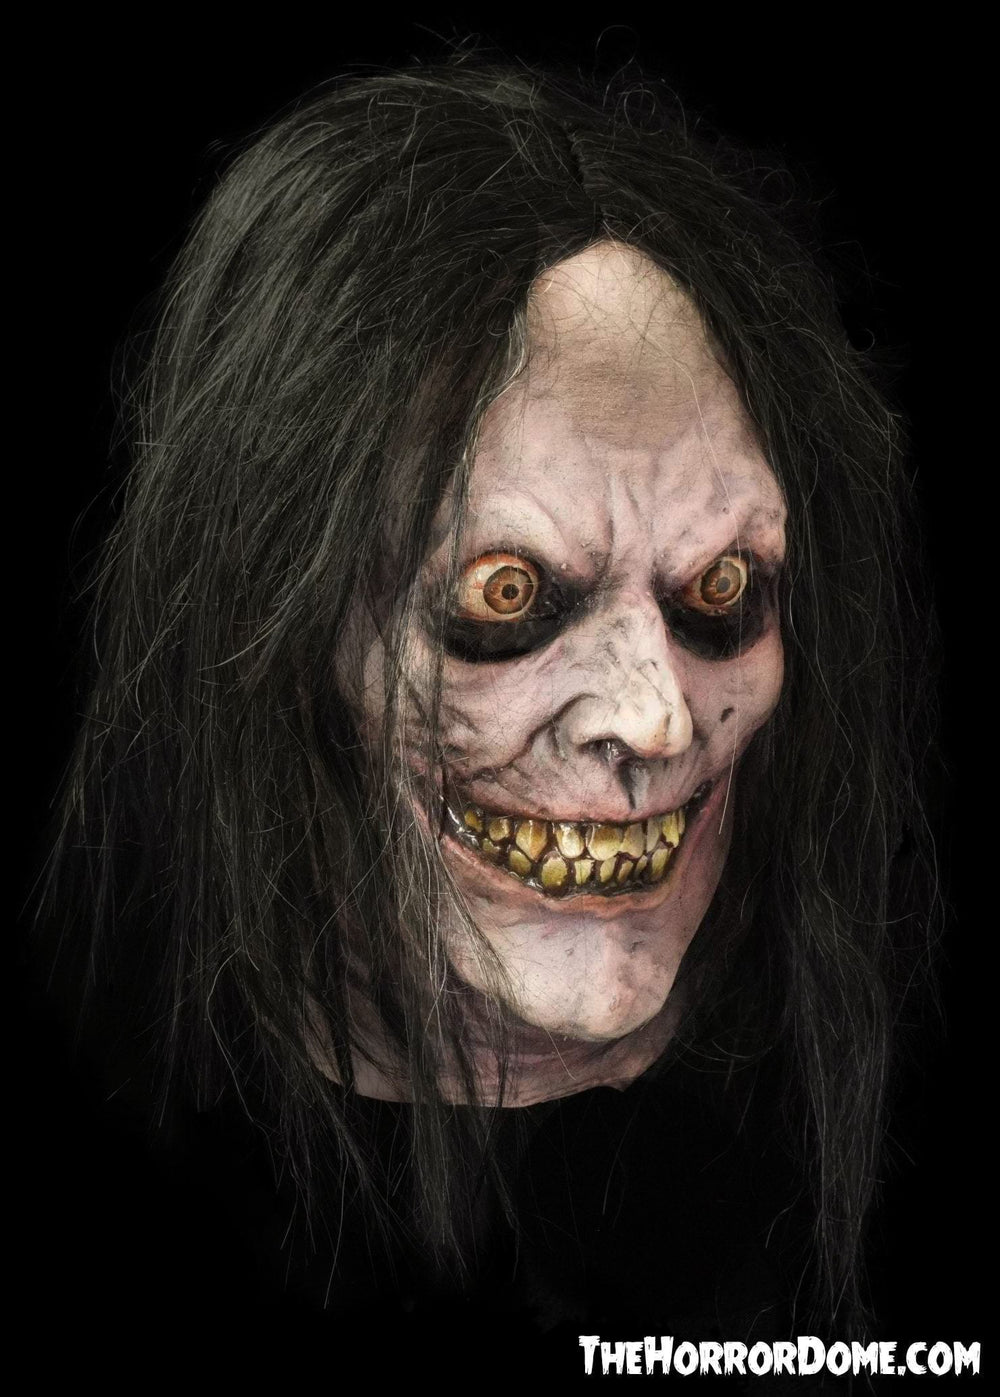  Halloween Mask "Psycho" HD Studios Pro Mask - Unleash the Terror